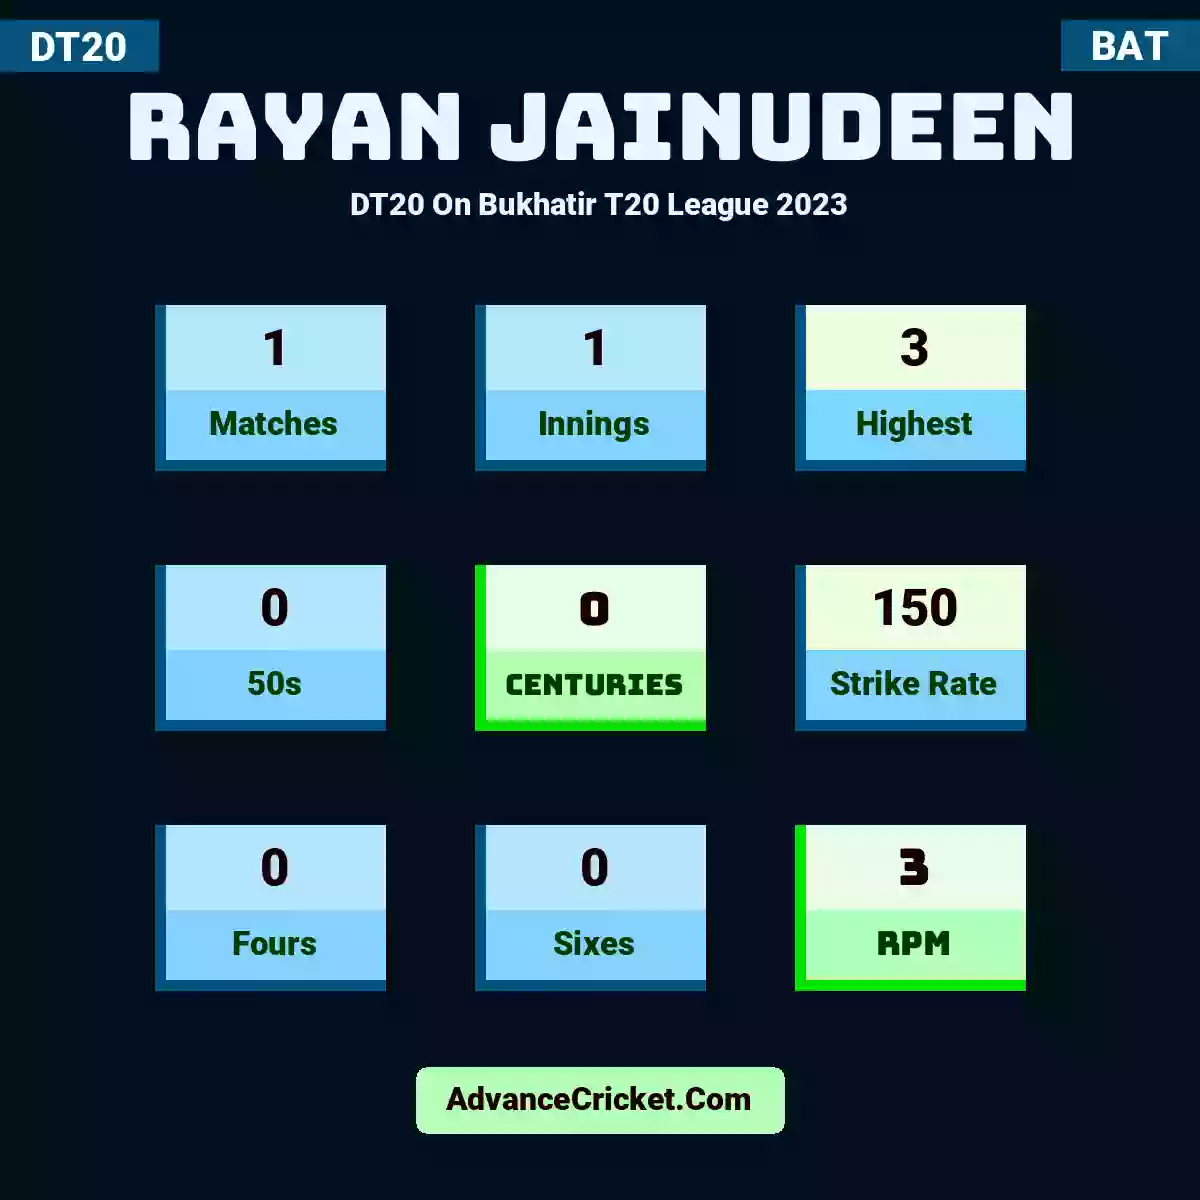 Rayan Jainudeen DT20  On Bukhatir T20 League 2023, Rayan Jainudeen played 1 matches, scored 3 runs as highest, 0 half-centuries, and 0 centuries, with a strike rate of 150. R.Jainudeen hit 0 fours and 0 sixes, with an RPM of 3.